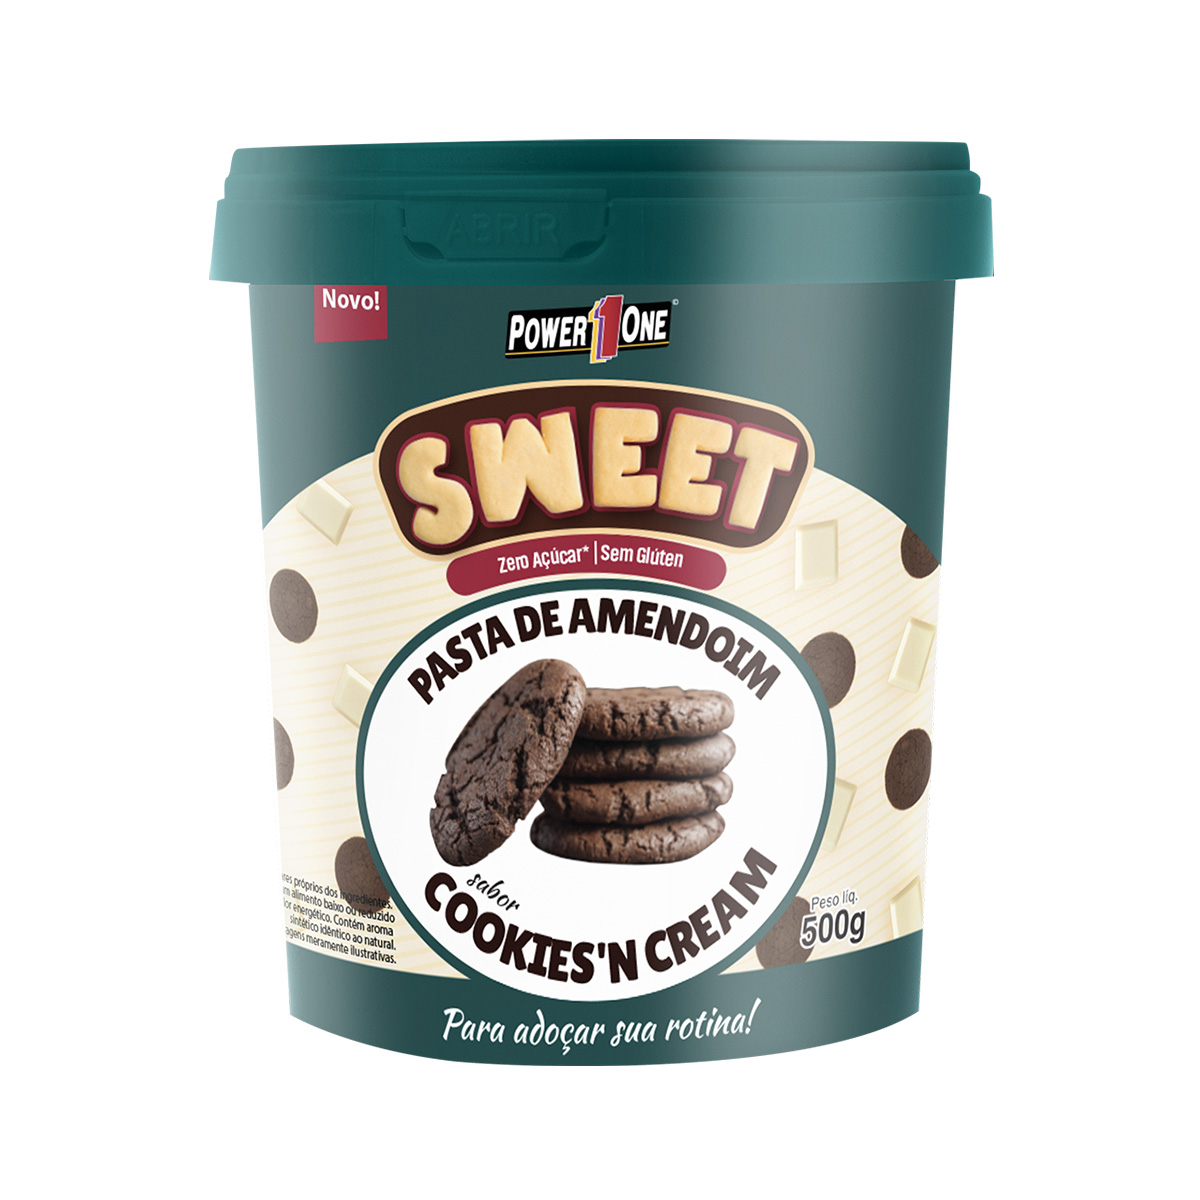 Pasta de Amendoim Sweet Sabor Cookies N Cream 500g - Power1One